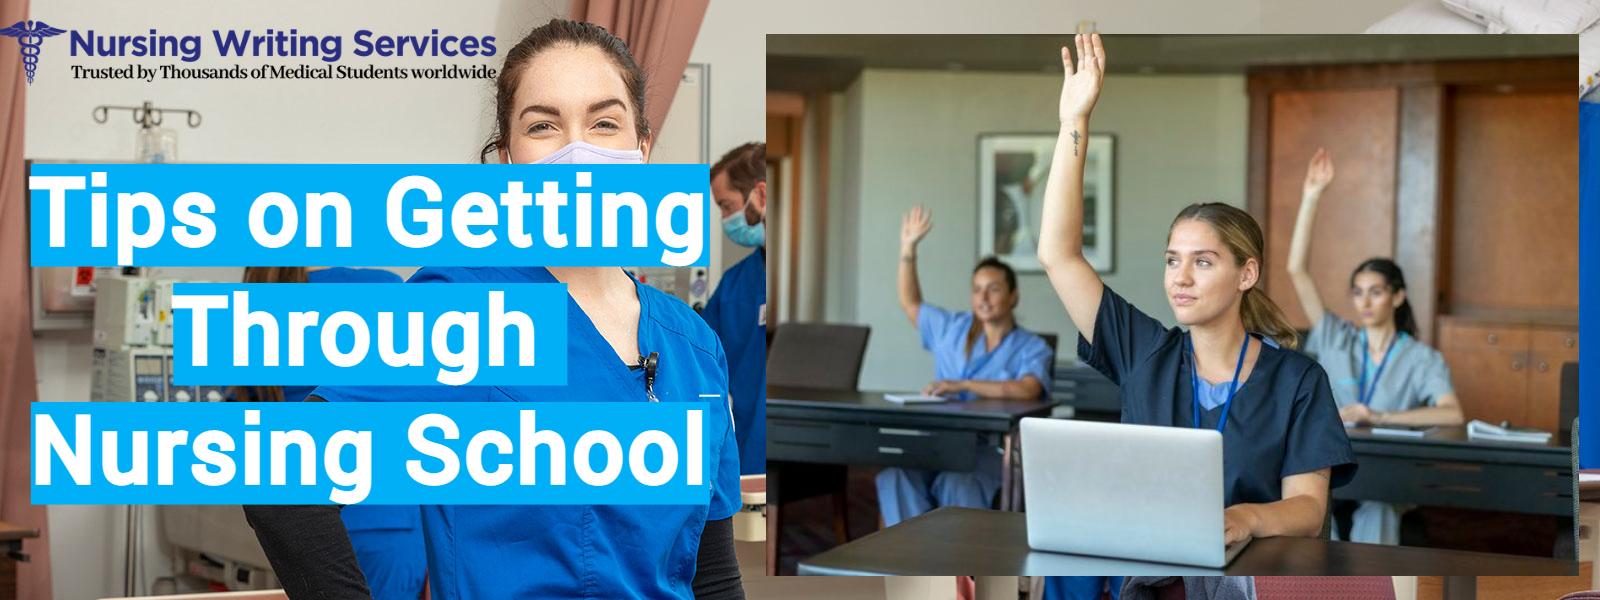 Tips on Getting Through Nursing School